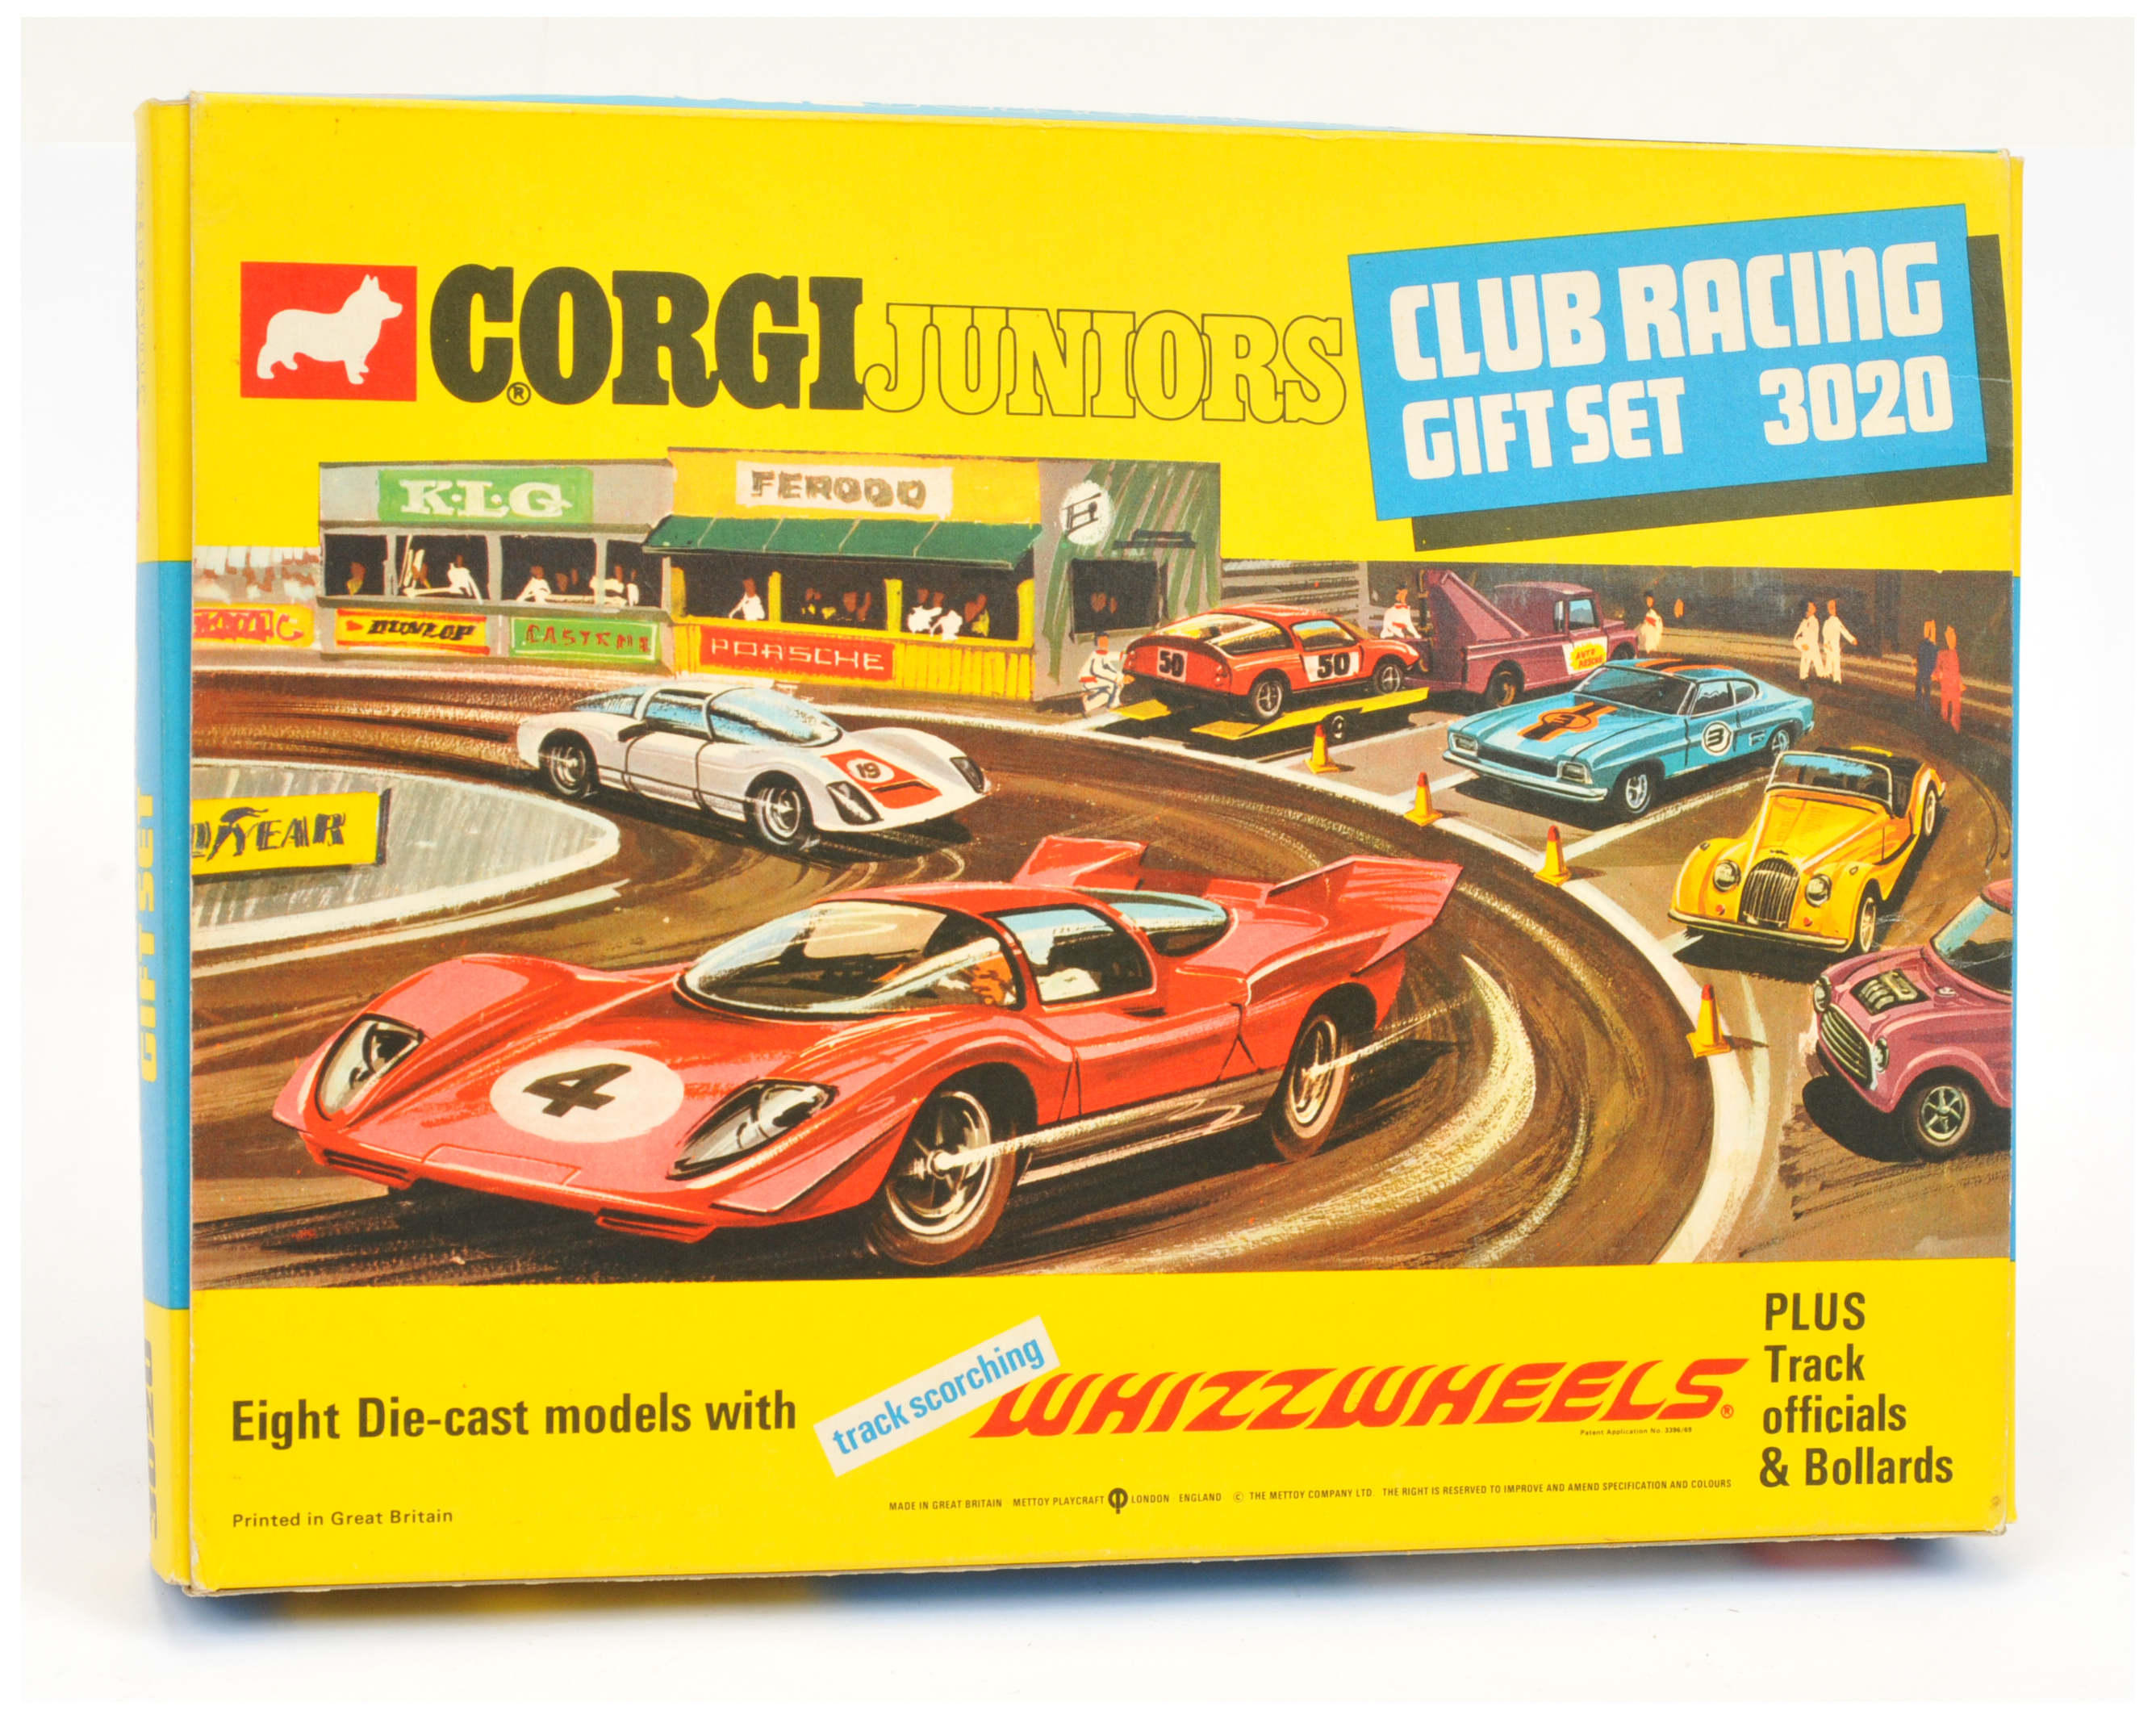 Corgi Toys Juniors 3020 "Club Racing" Gift Set To Include 7 Pieces- Ford Capri, Land Rover Wrecke... - Image 2 of 2